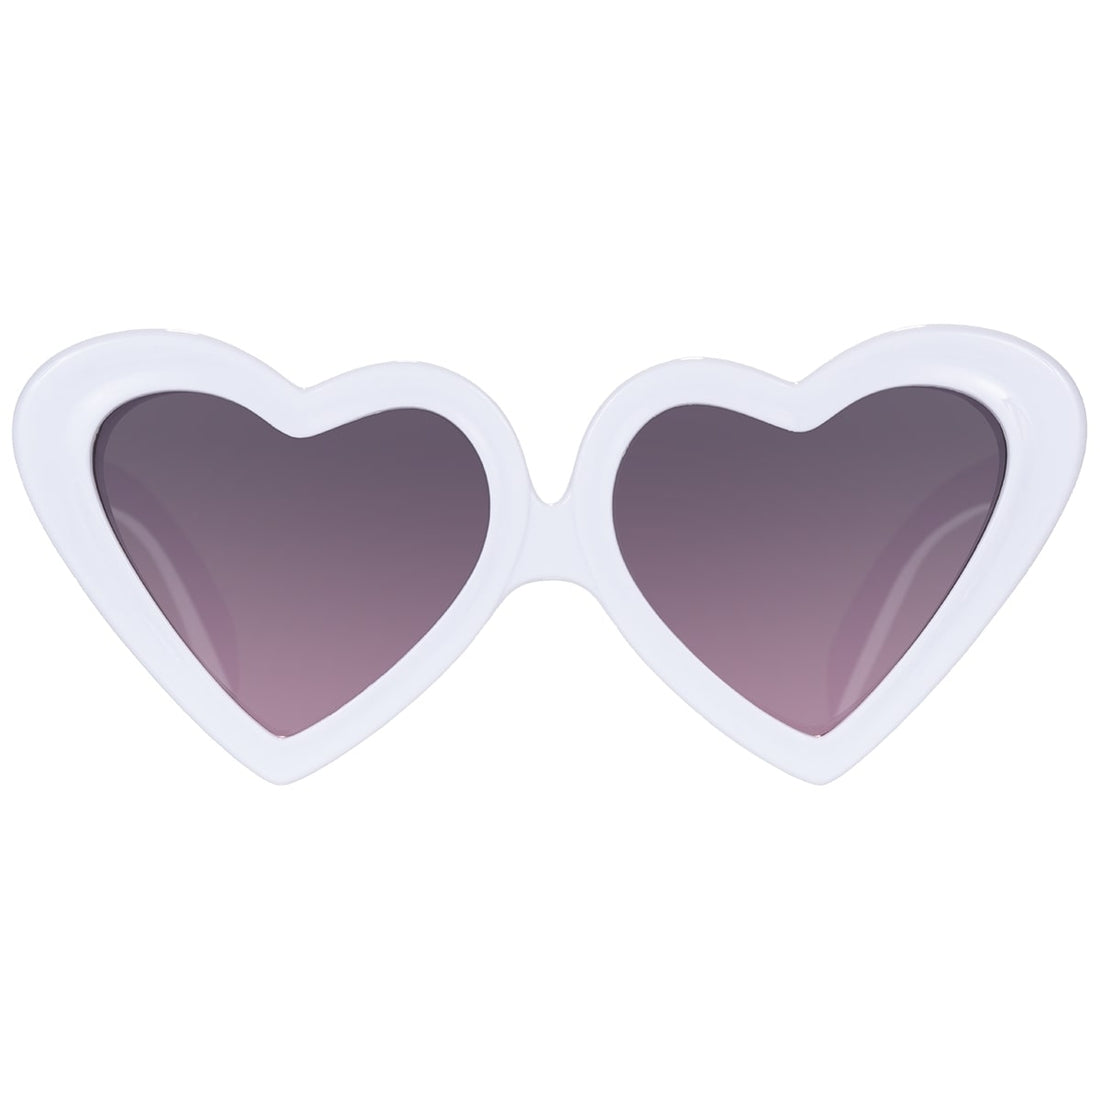 The Gramercy Heart Runway Collection sunglasses babiators